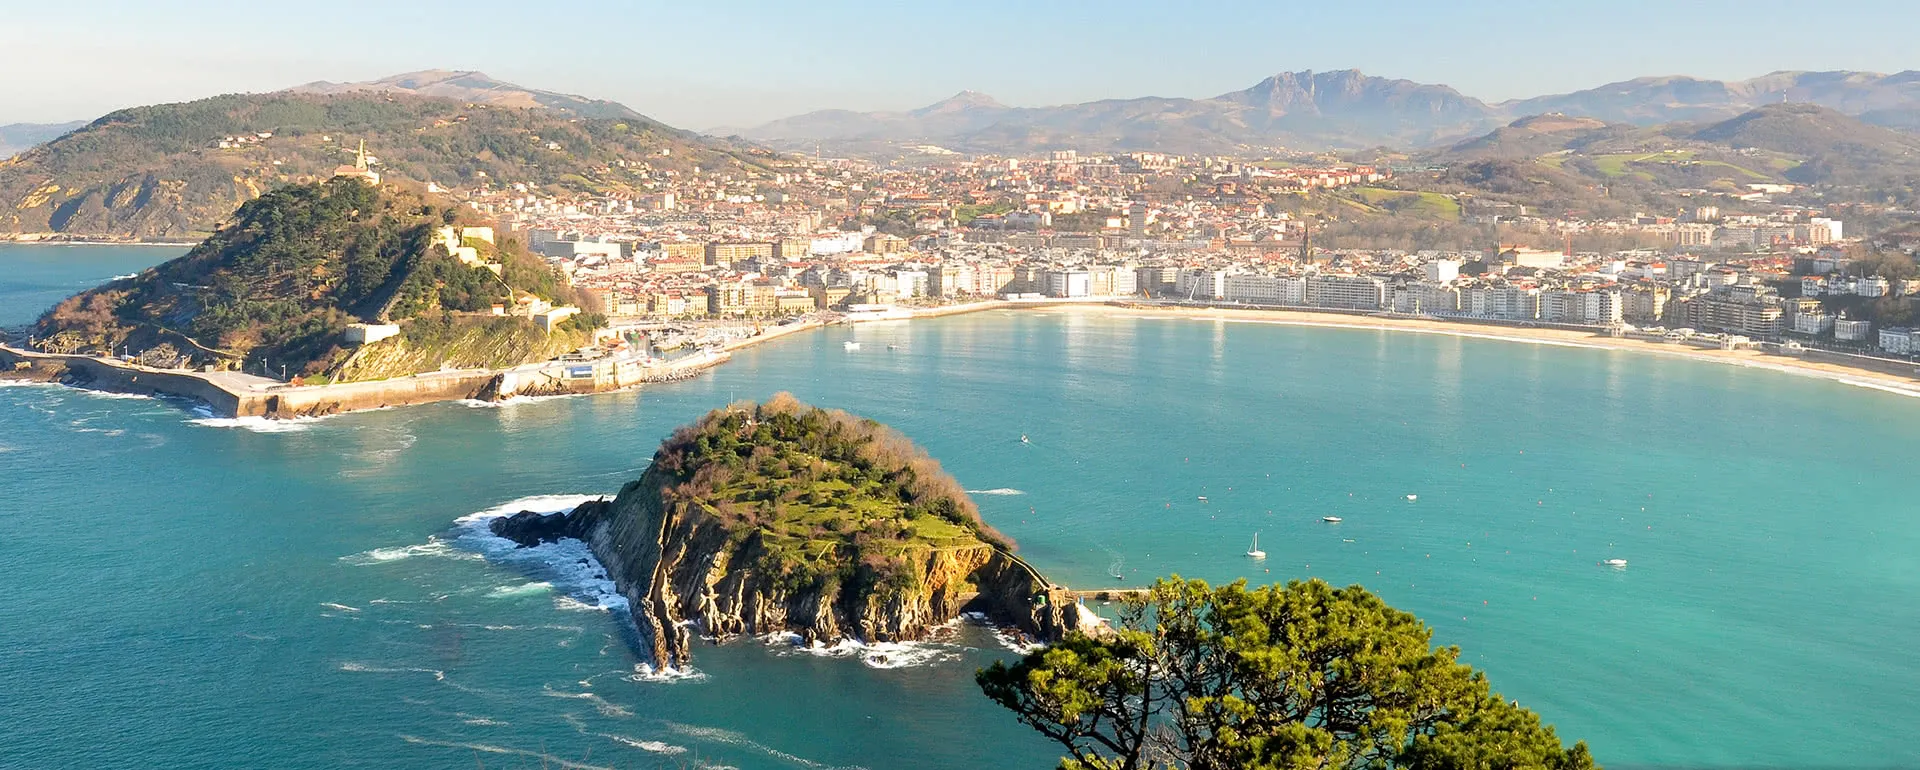 Meeting und Tagungsort Donostia-San Sebastián